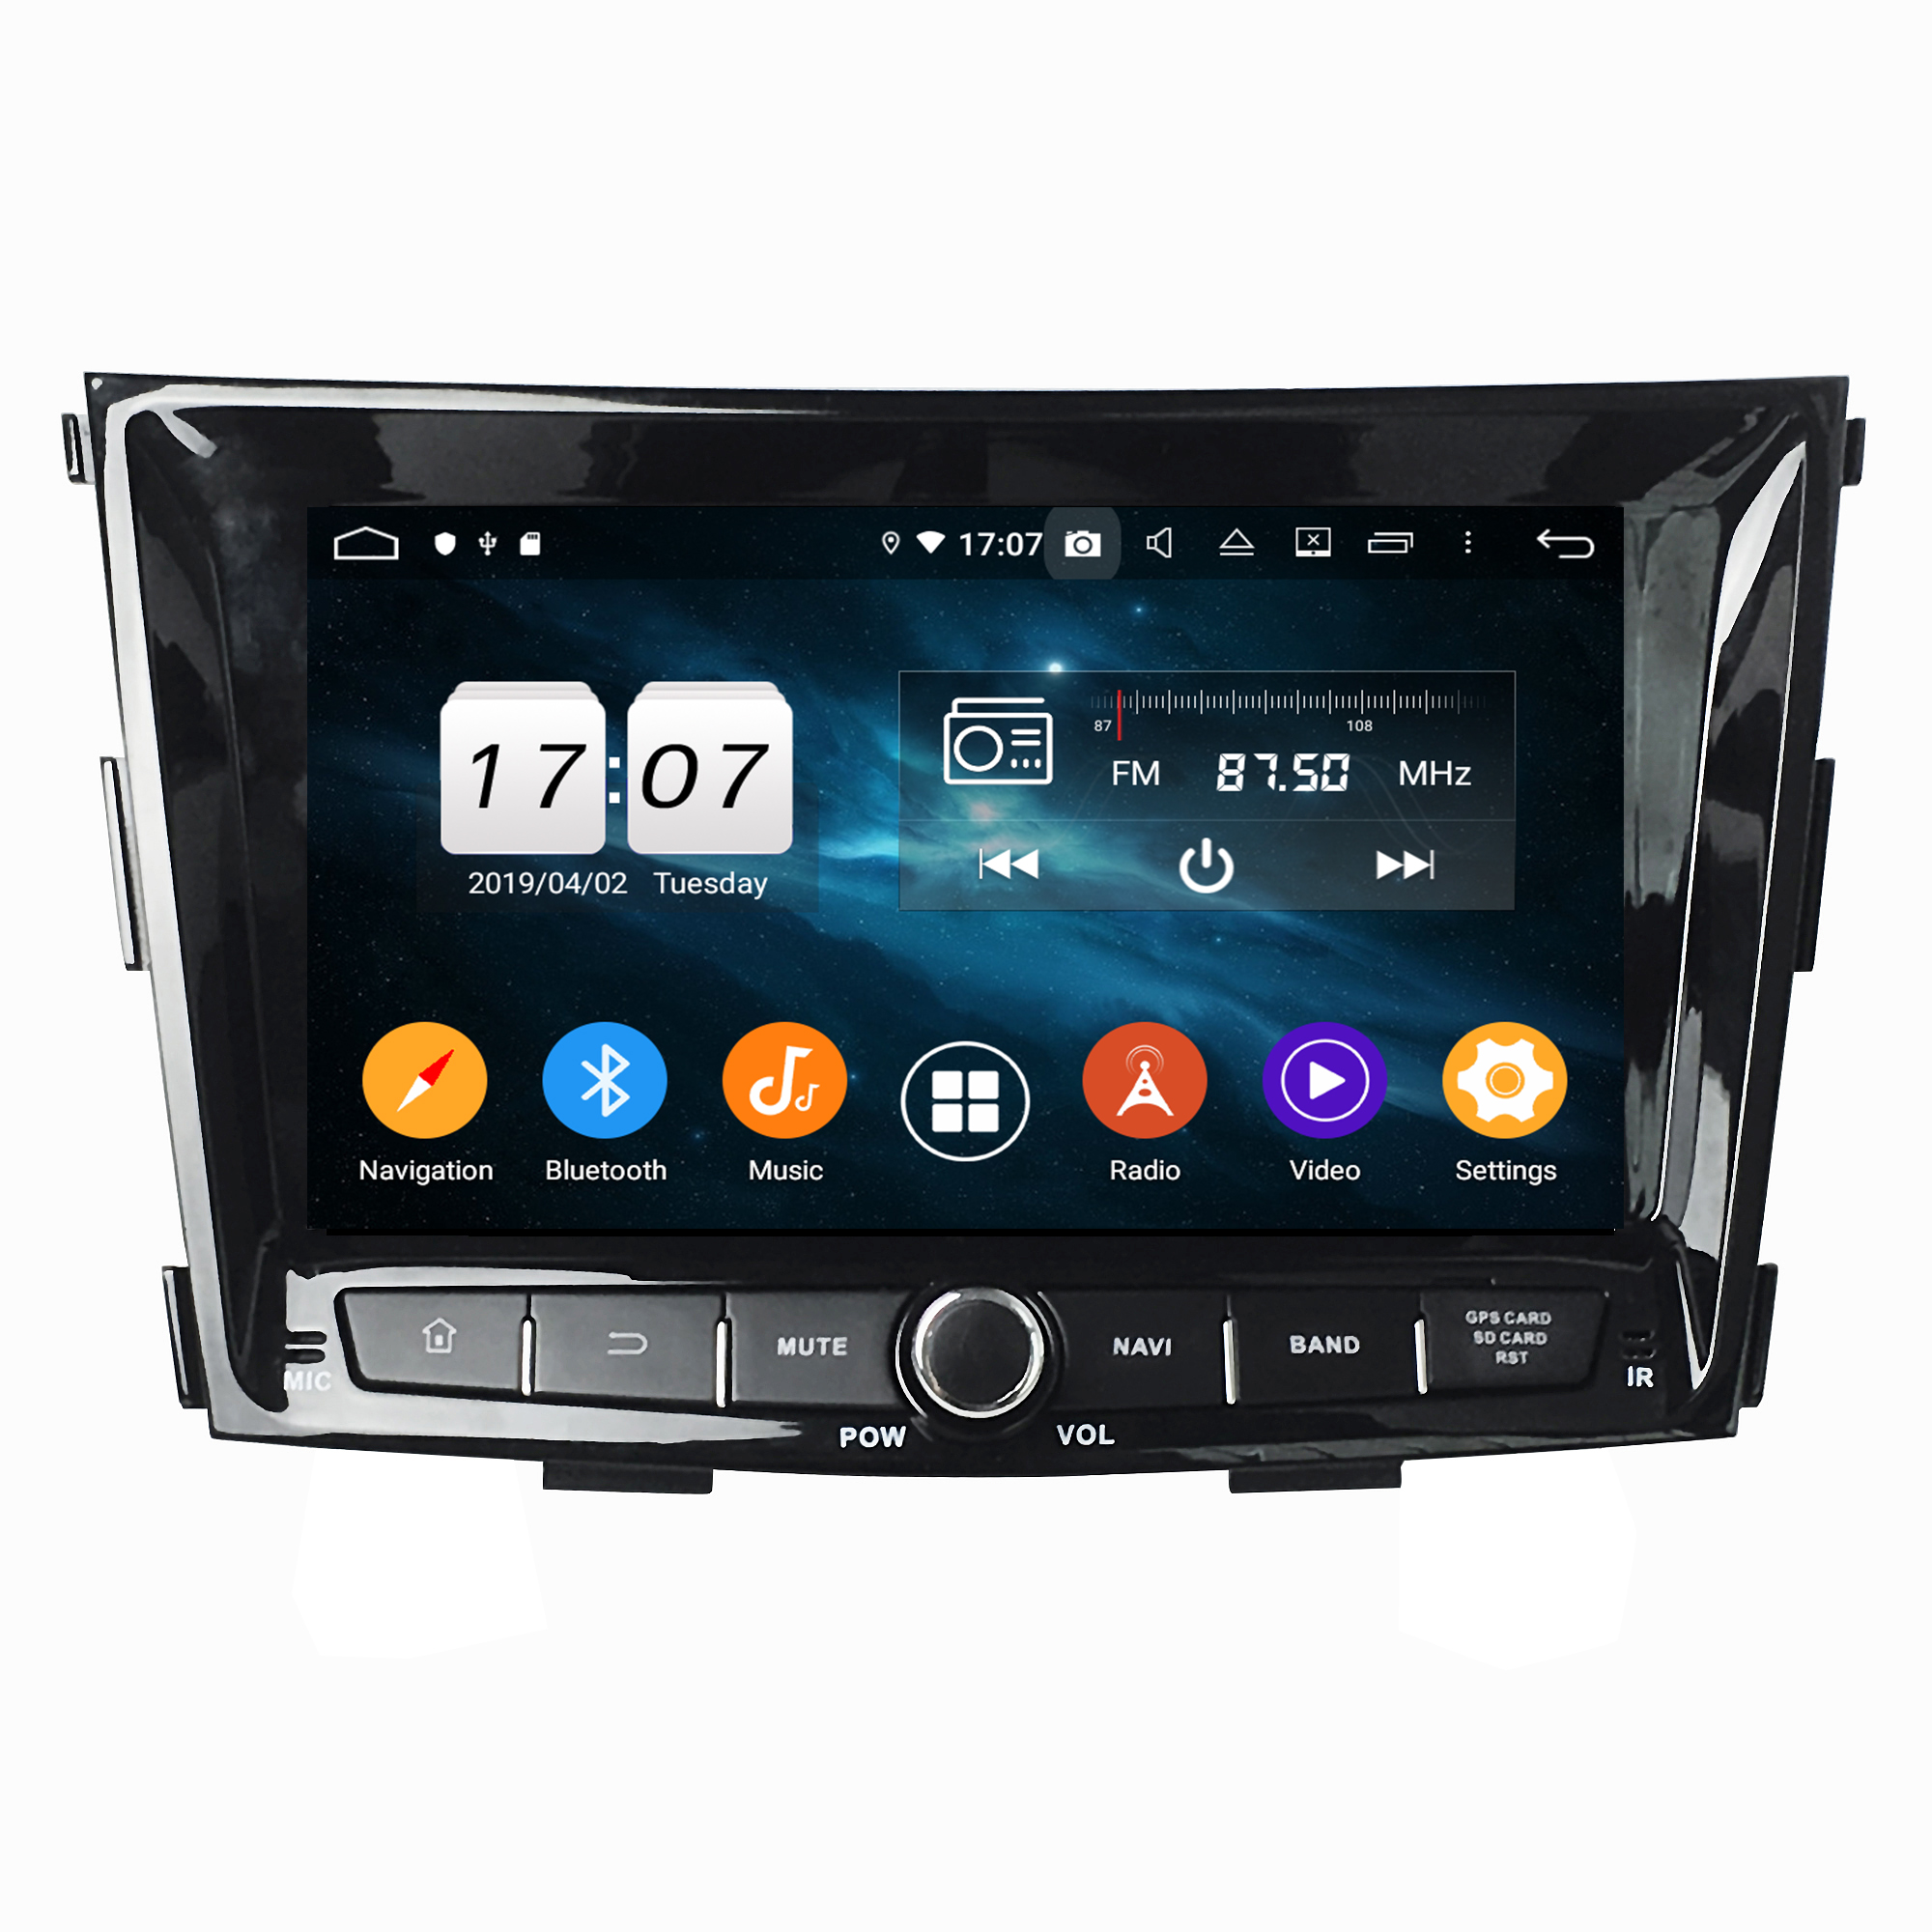 KD-8116 Car Navigation Player Auto Receiver For SsangYong Tivolan